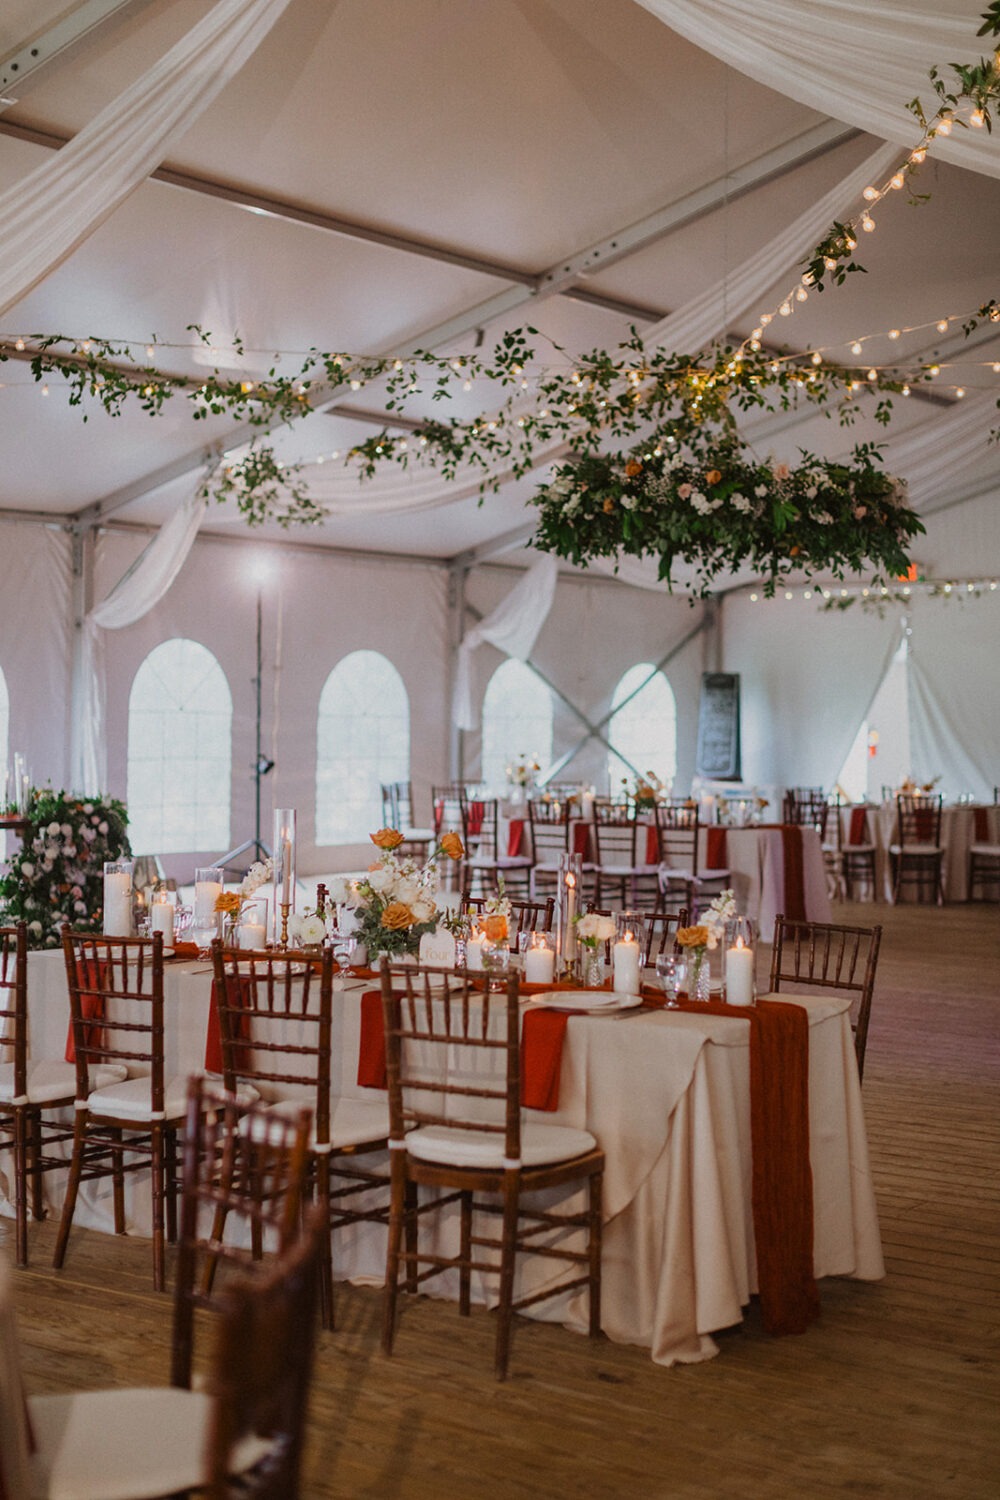 wedding greenery and florals at Walker's Overlook farm wedding venue
